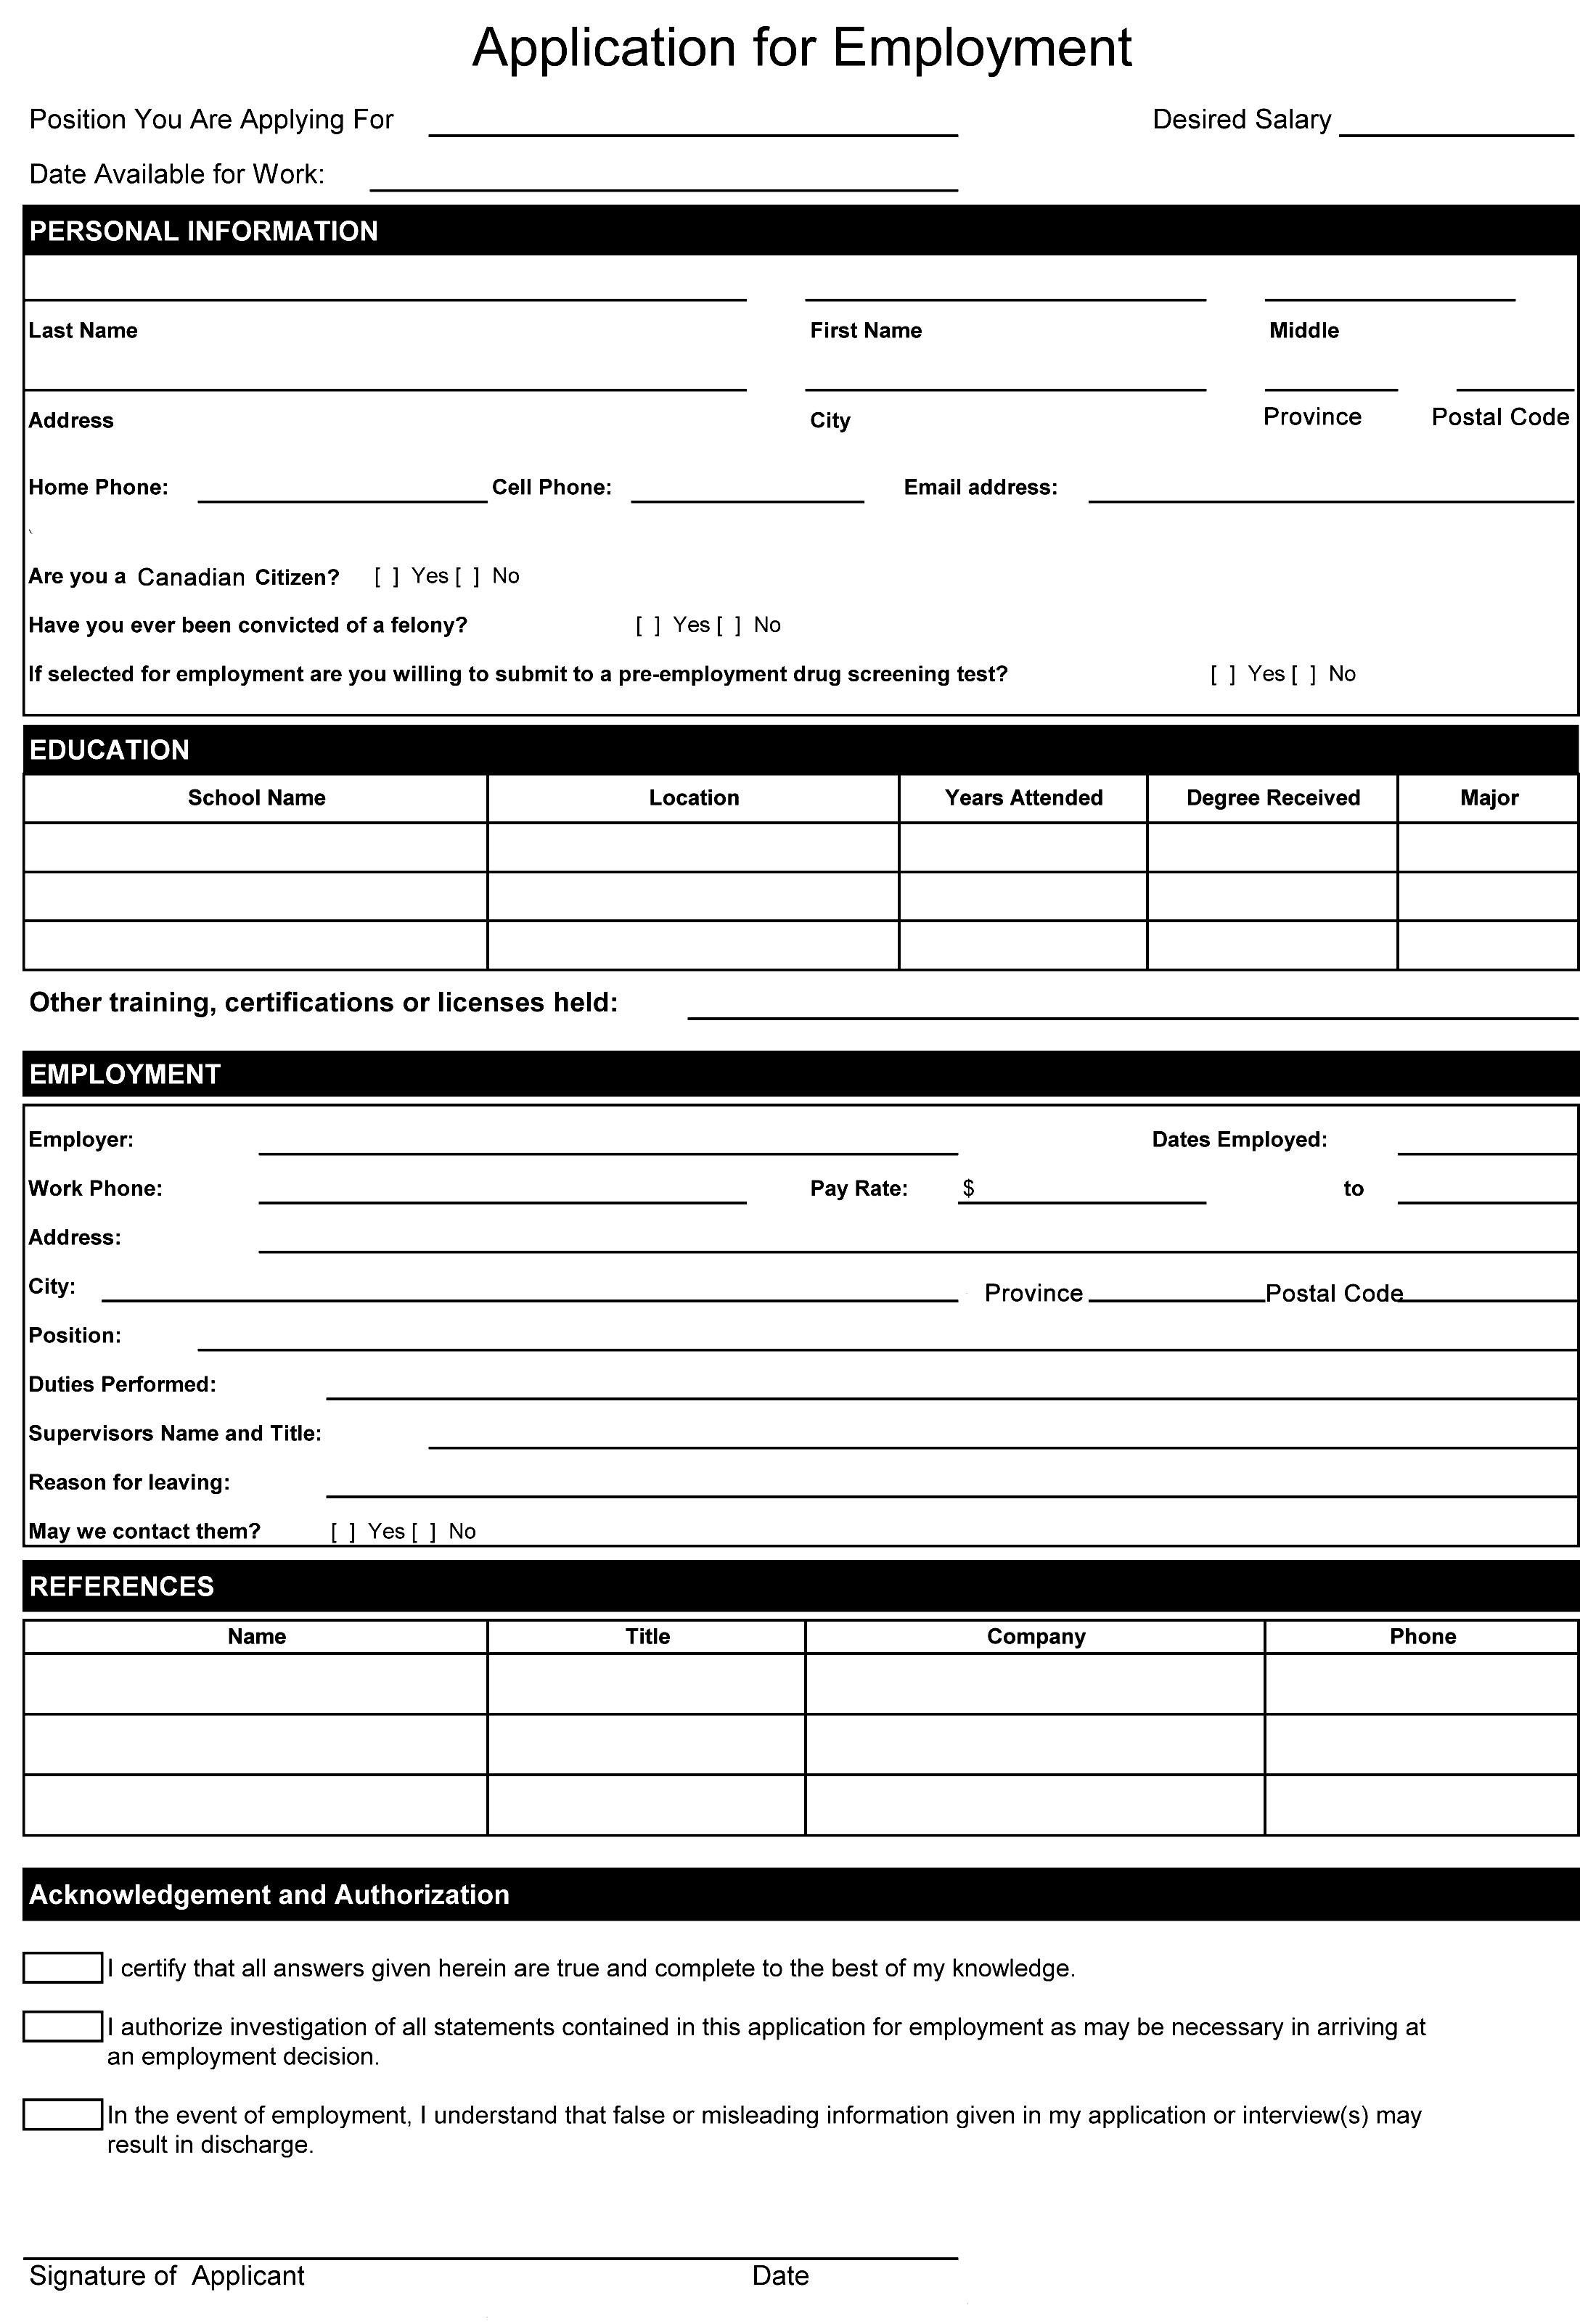 Resume Format Word Document | Resume Format | Job Application - Free Printable Job Application Form